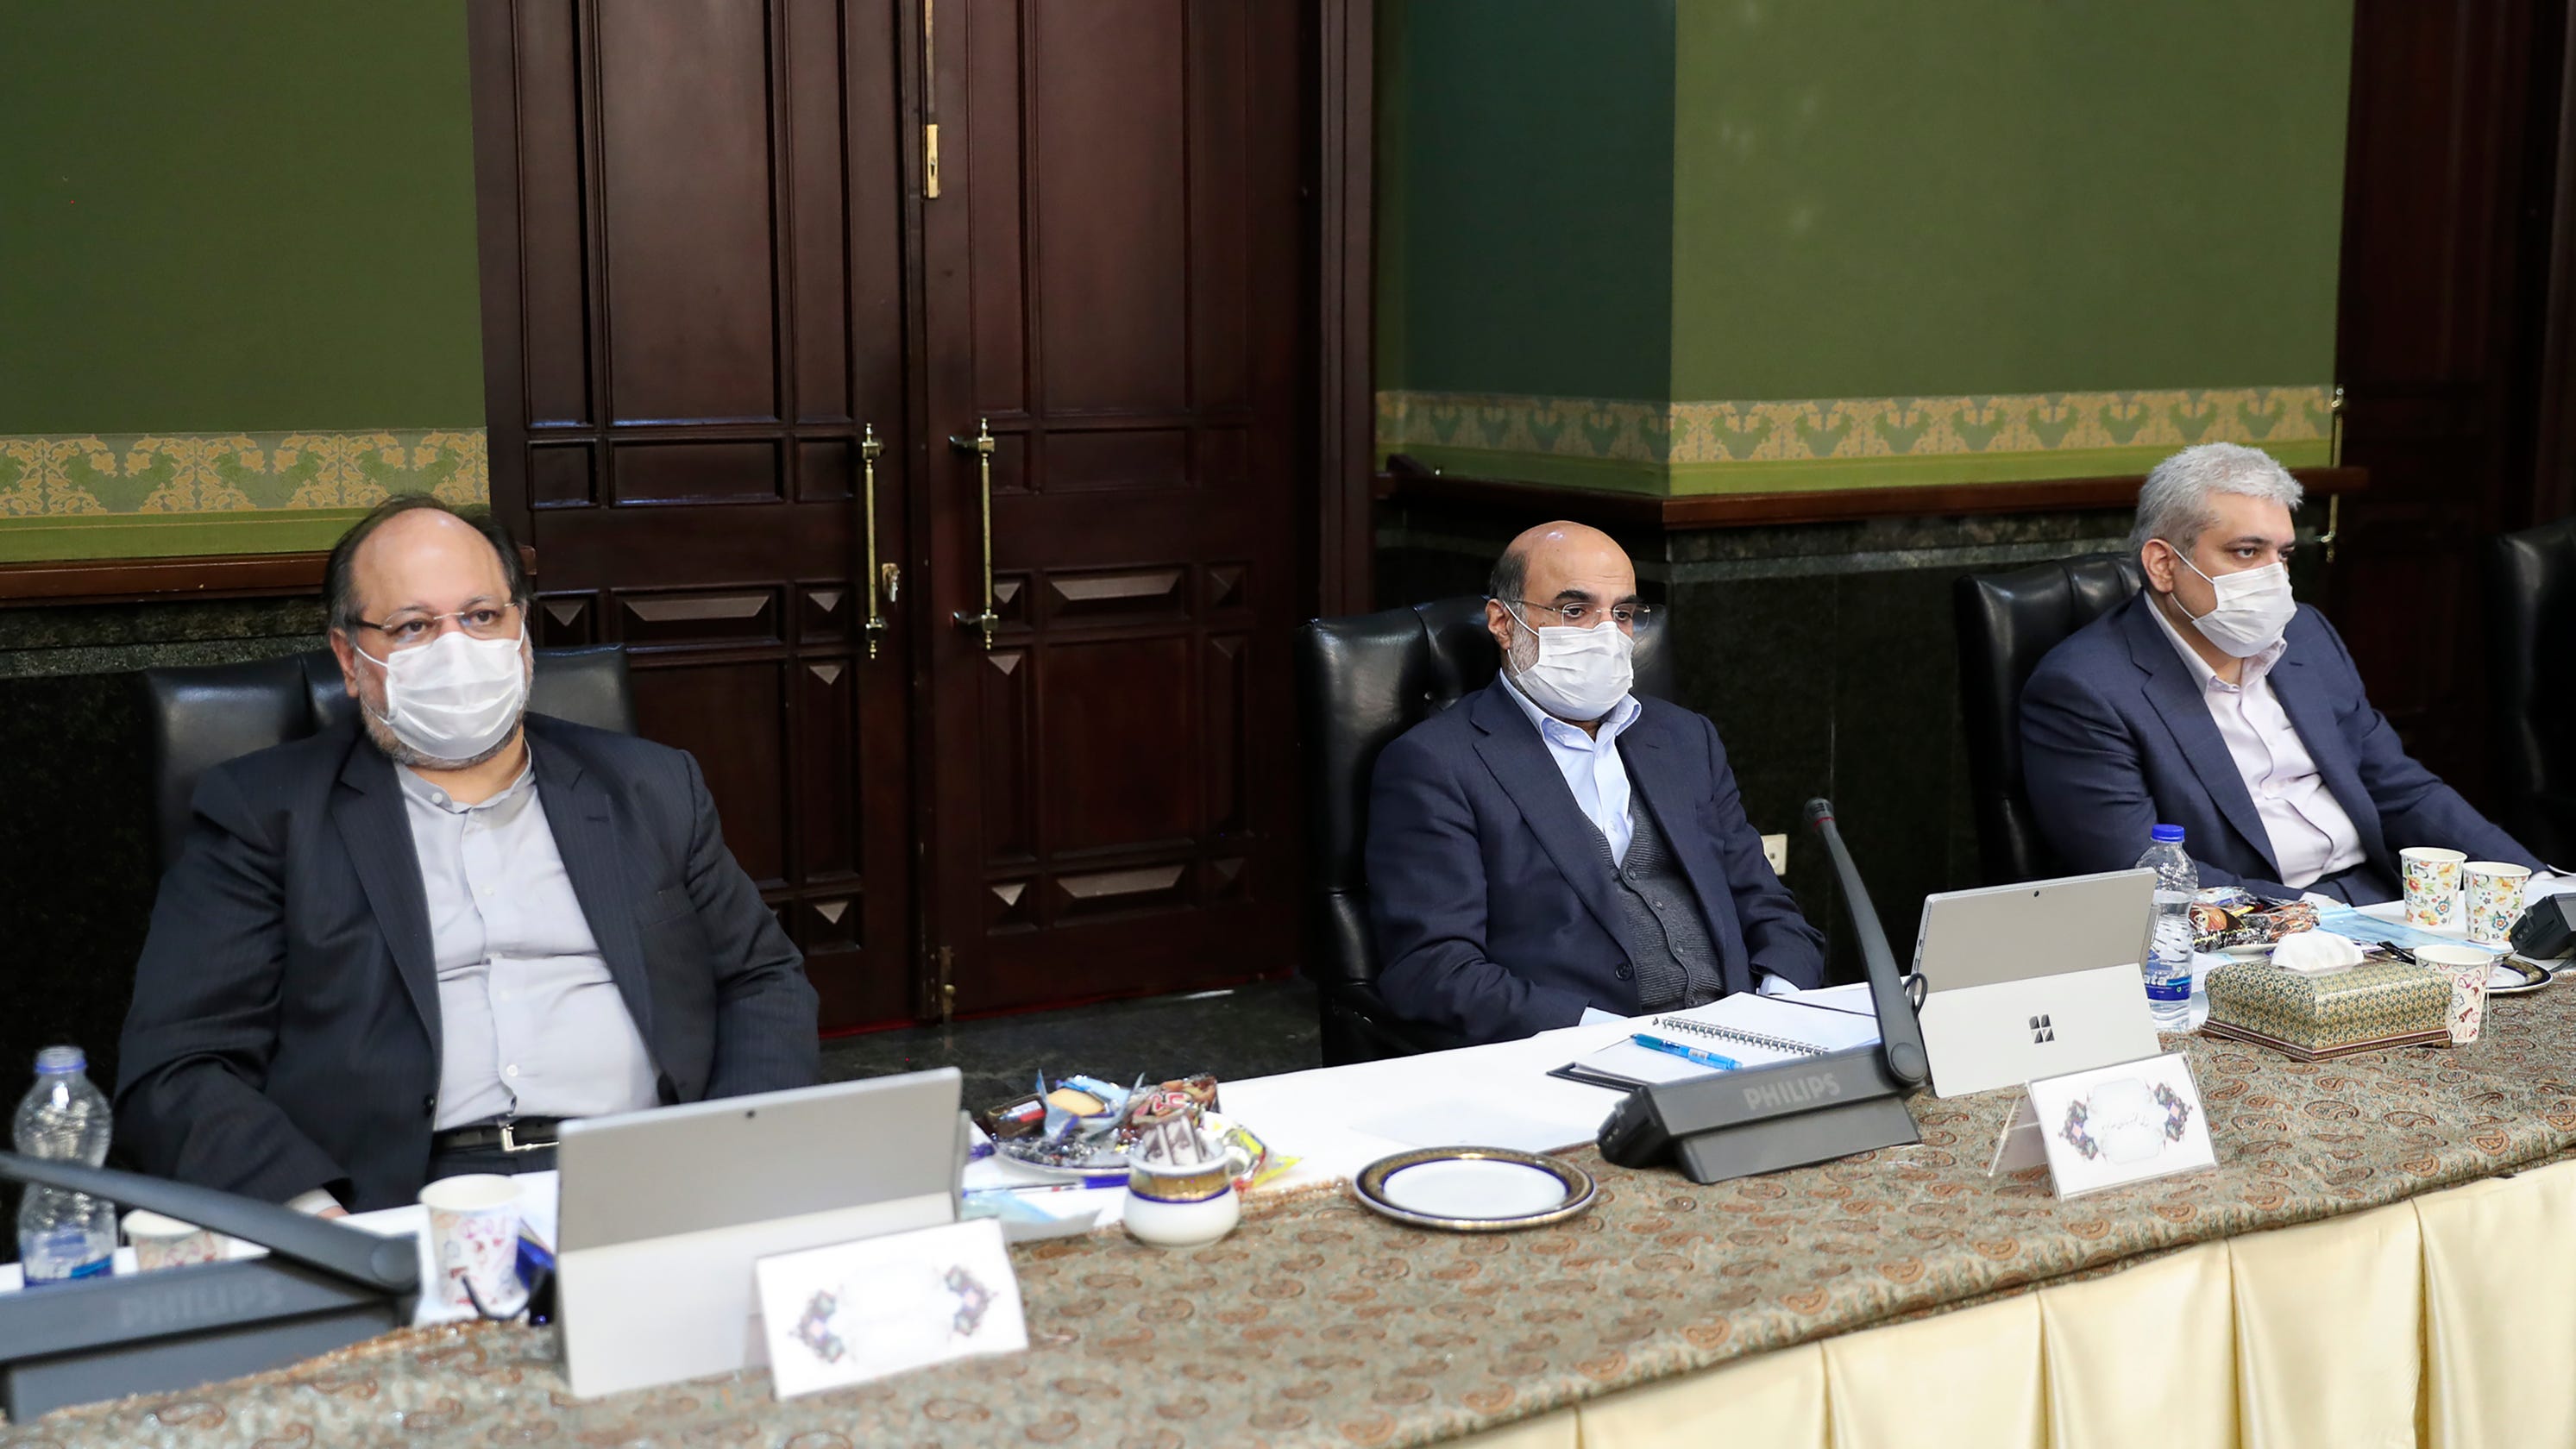 News Agency Iran Vp 2 Cabinet Members Have New Virus